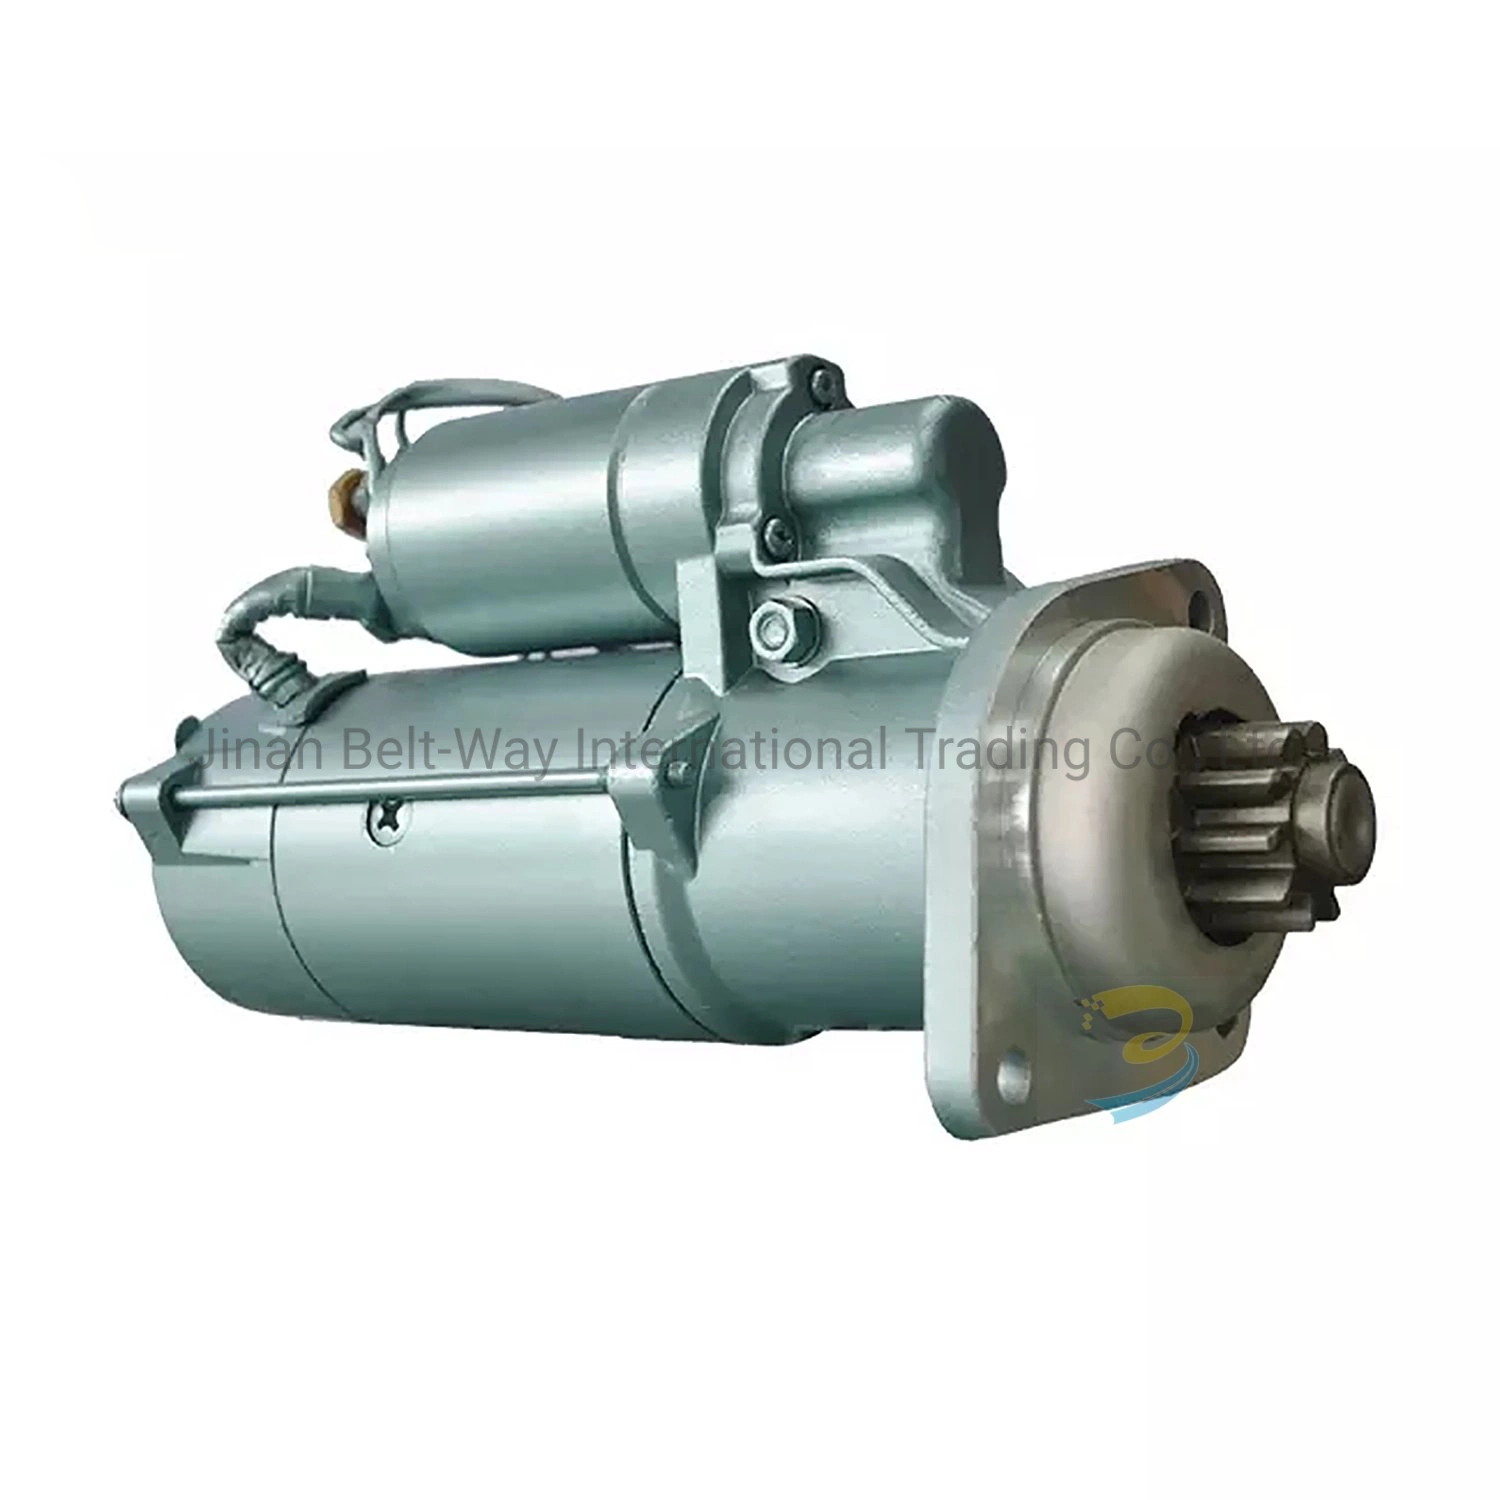 Sinotruk HOWO Truck Spare Parts Engine Starter Motor Vg1560090001